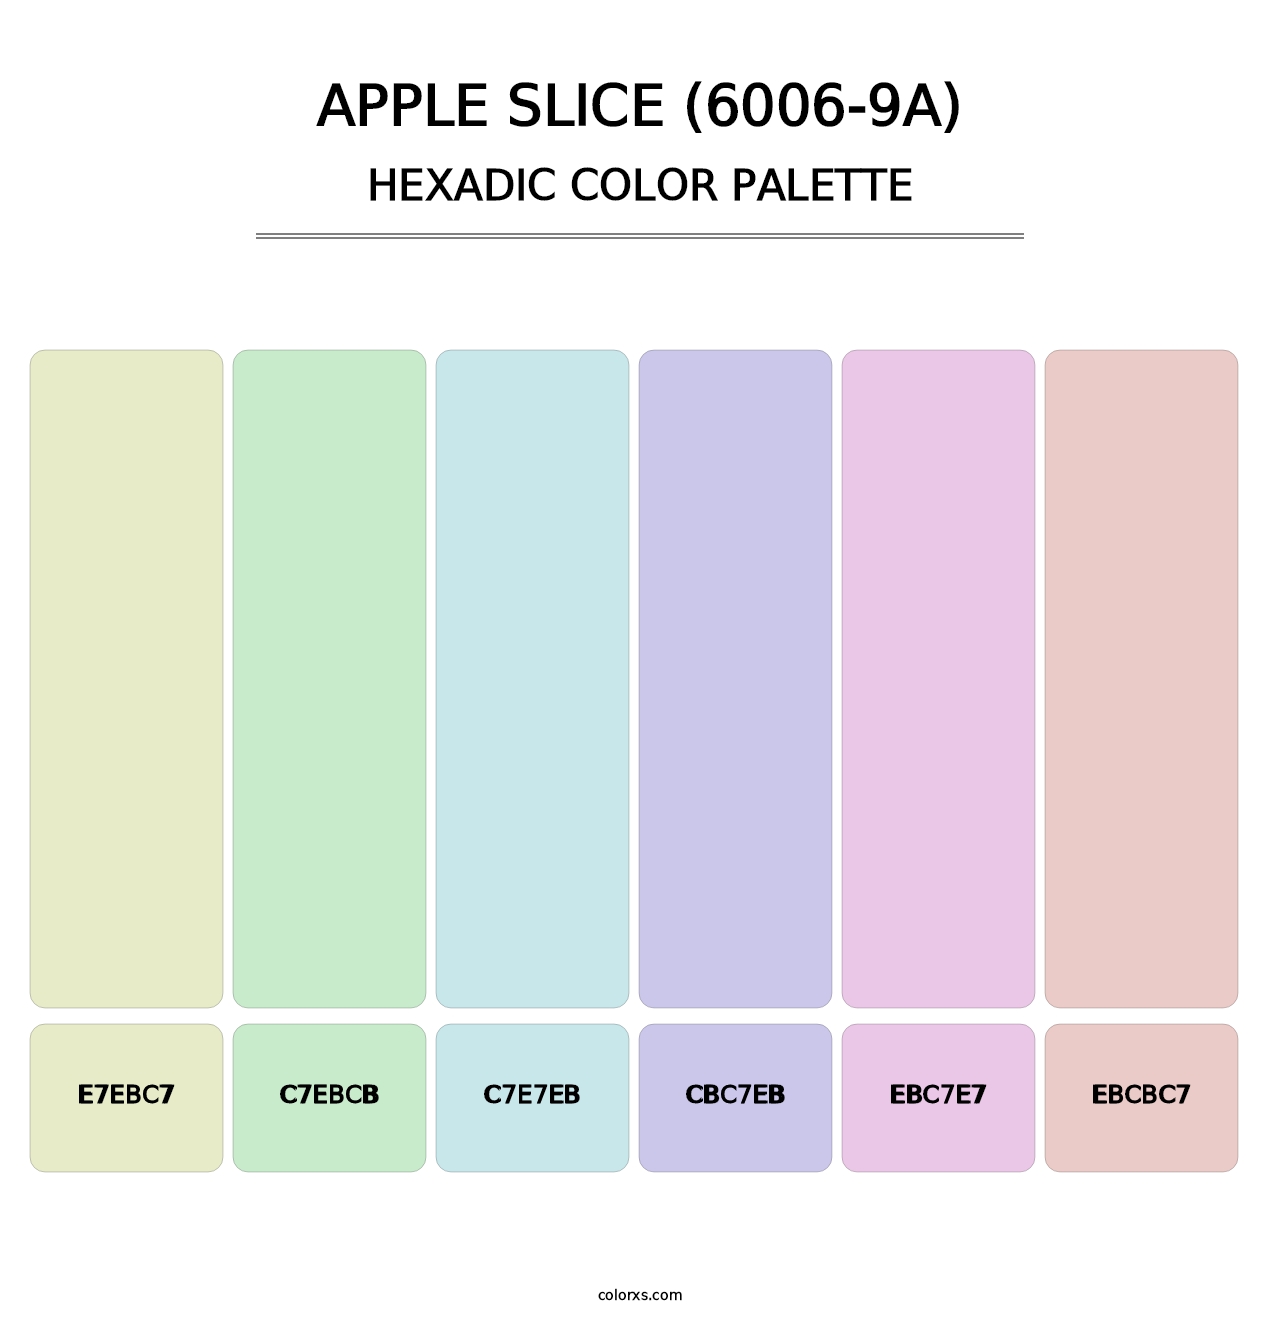 Apple Slice (6006-9A) - Hexadic Color Palette